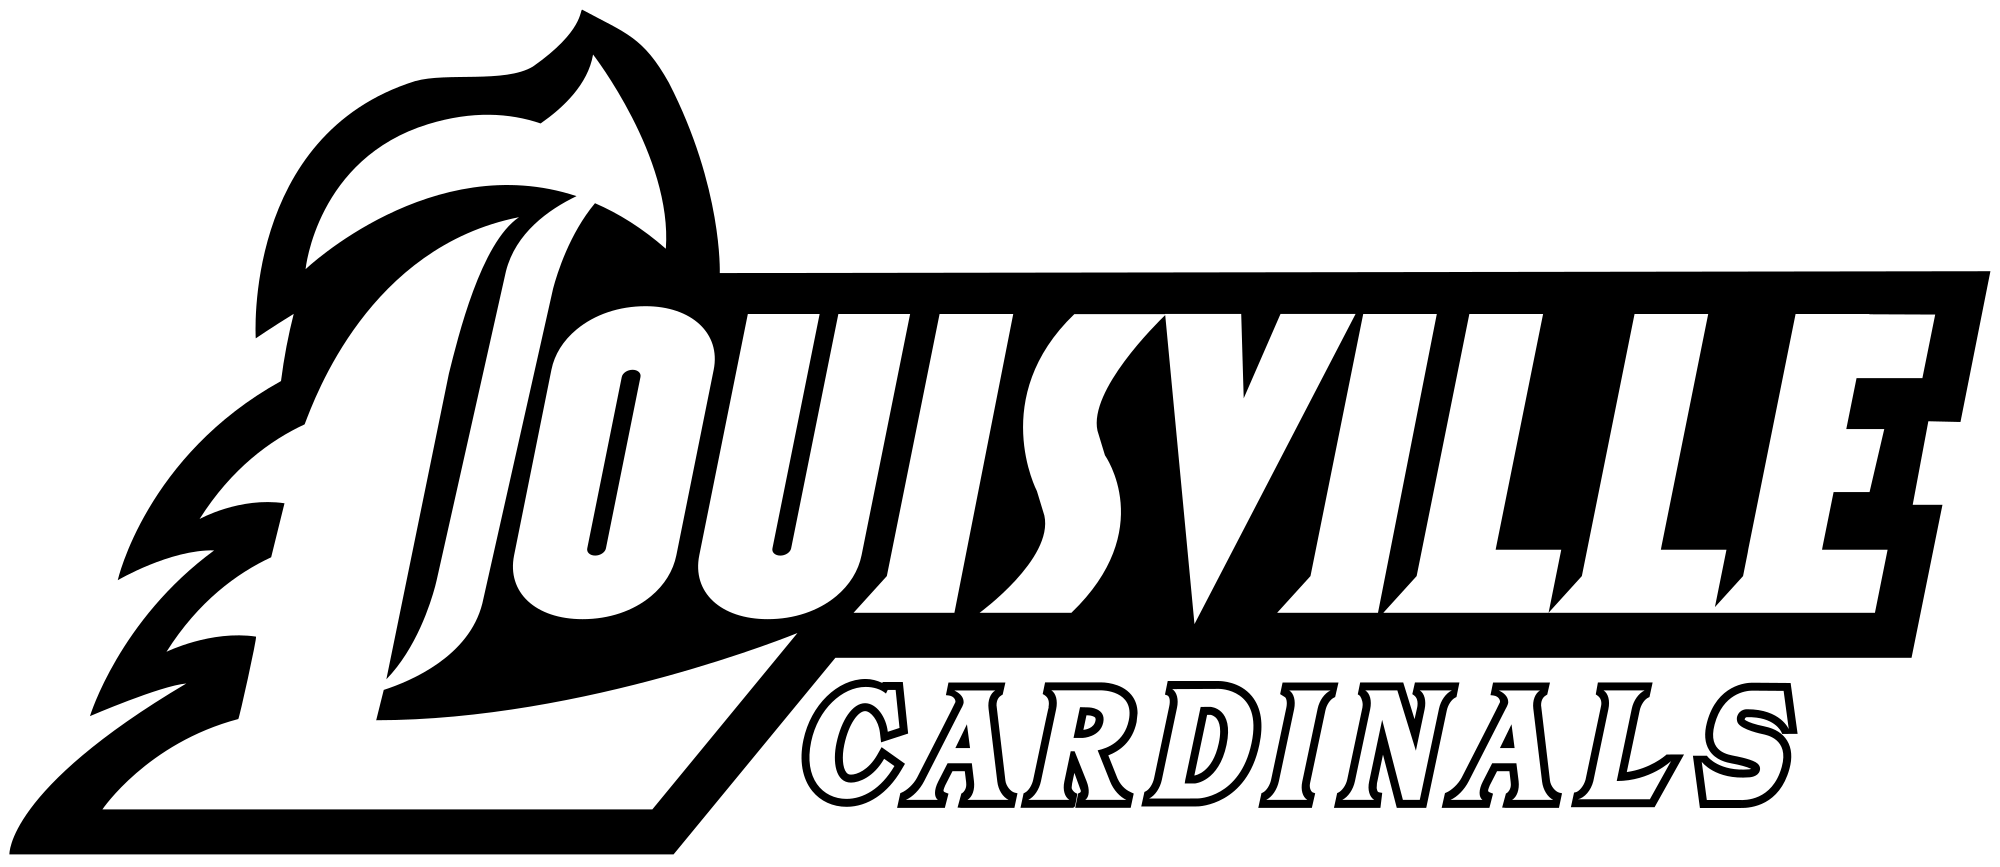 University of Louisville Cardinals Logo - File:Louisville Cardinals text logo.svg - Wikimedia Commons